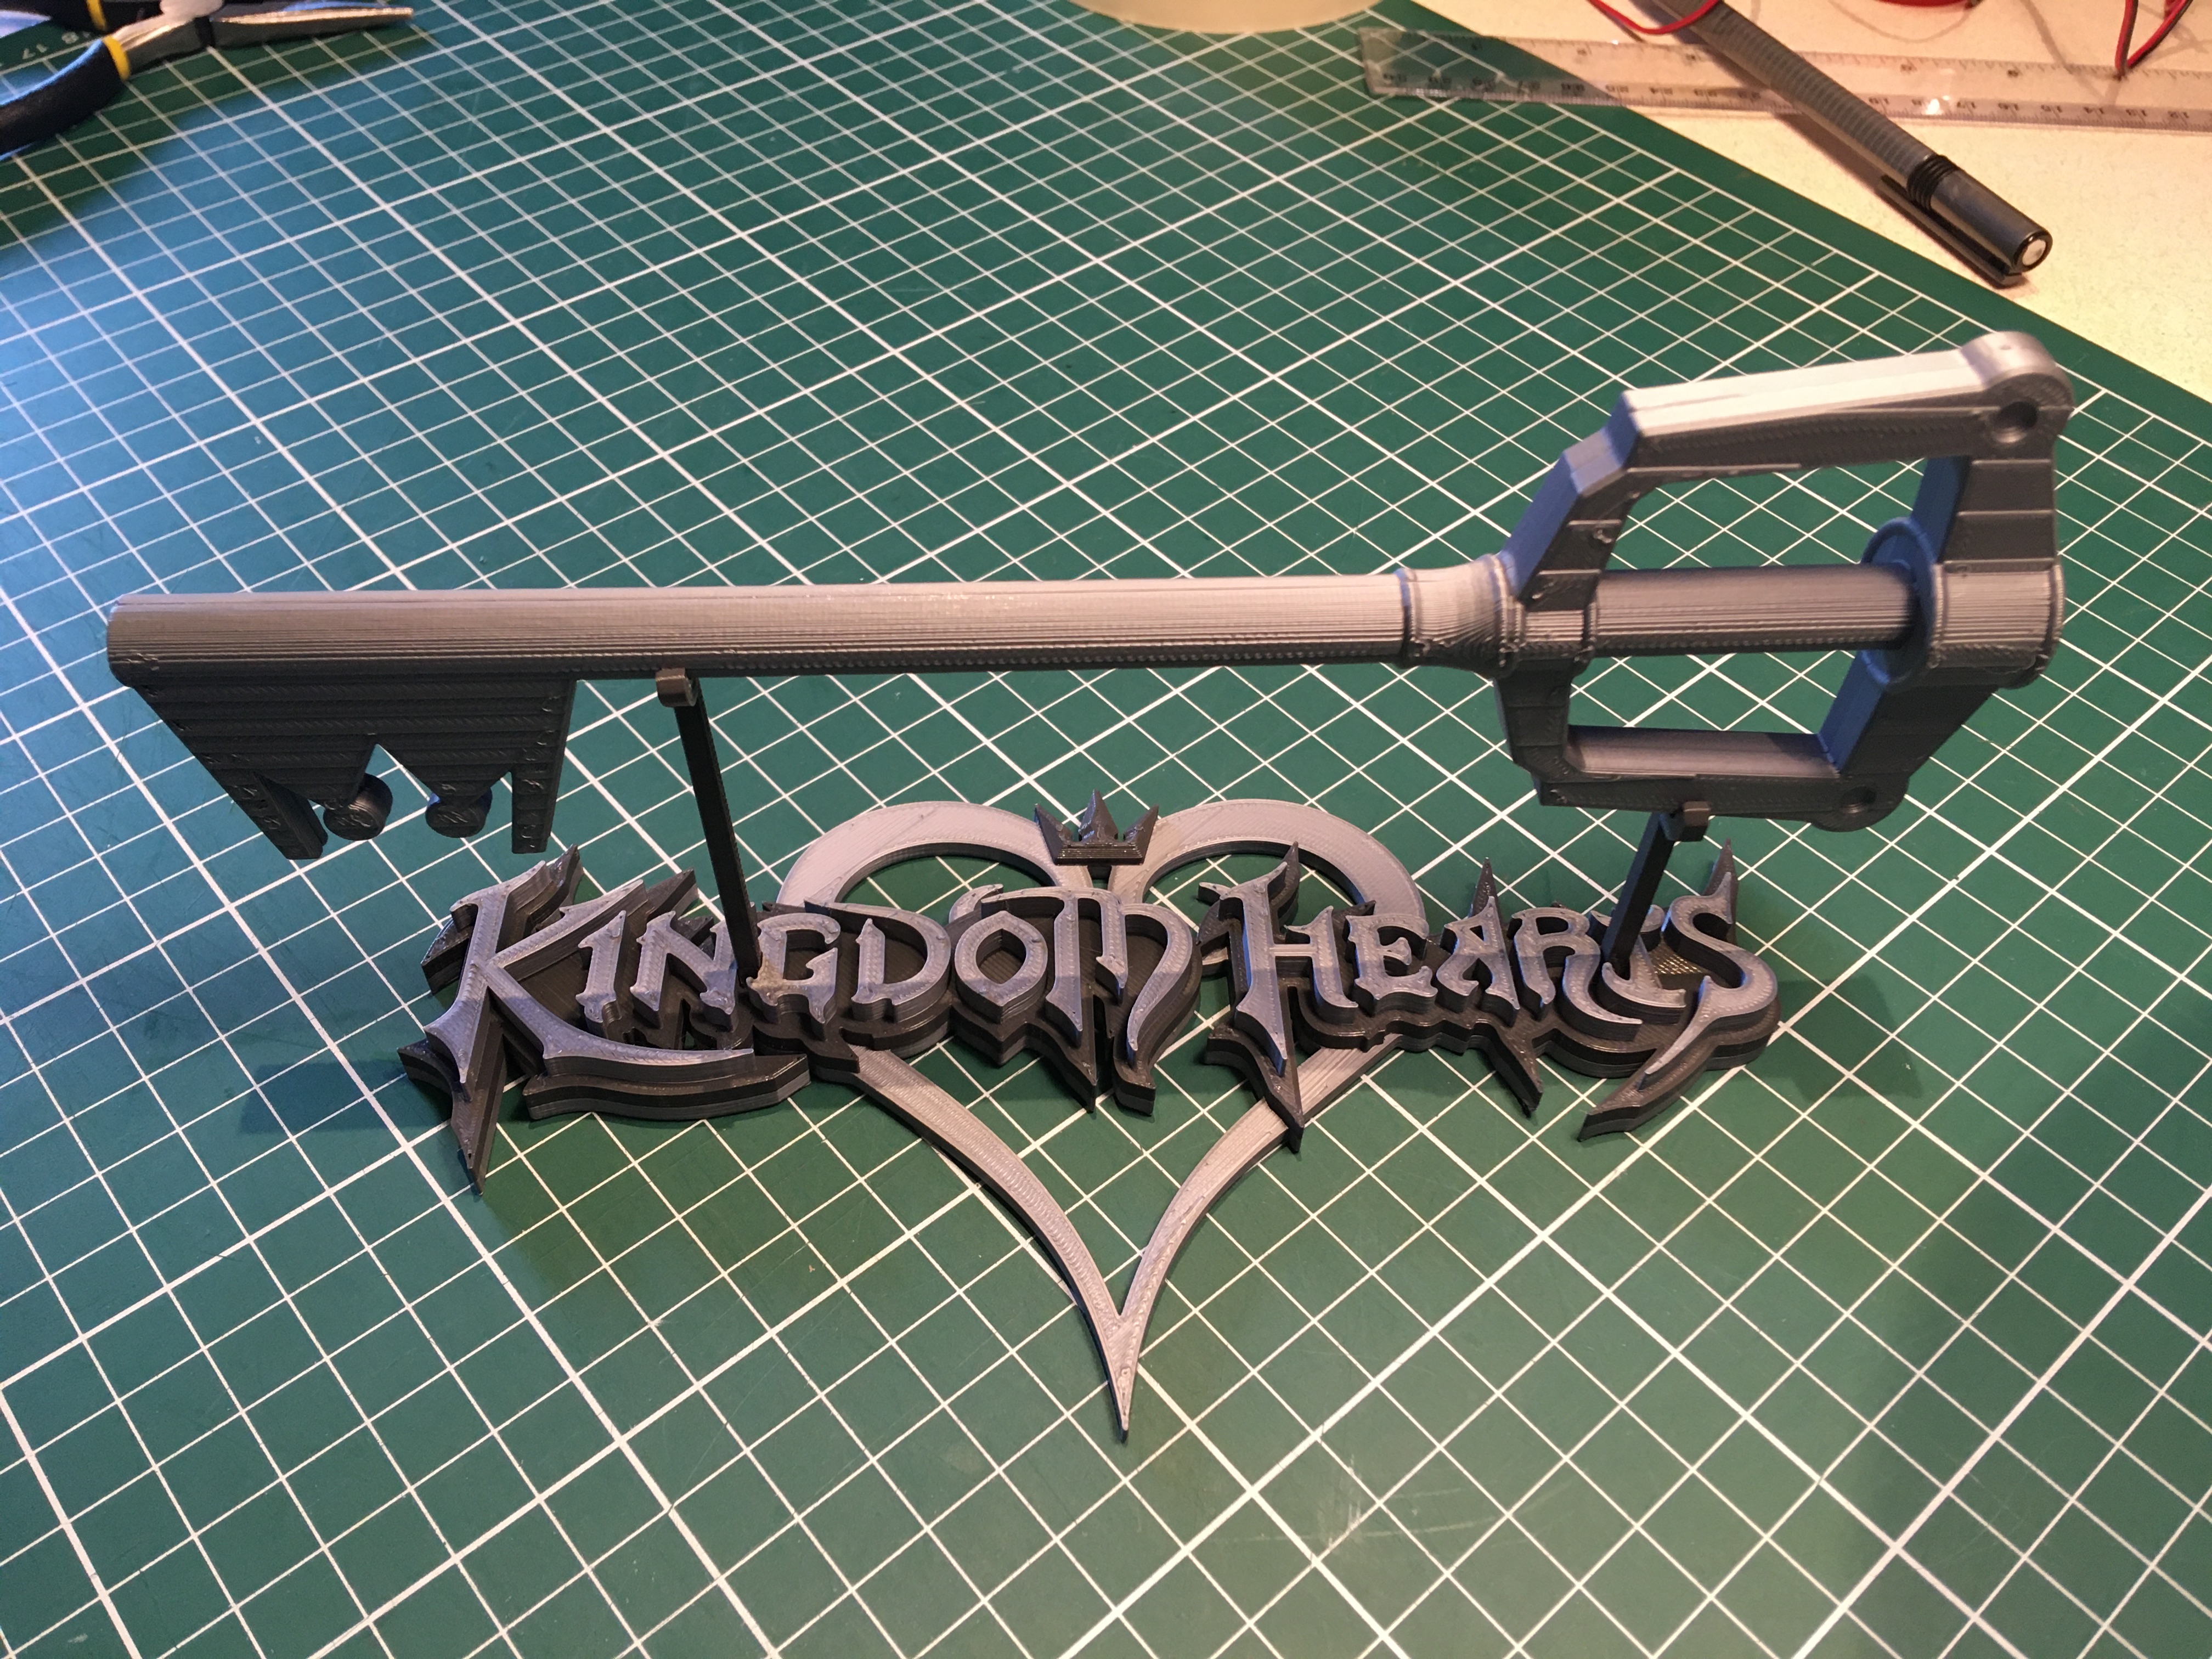 Kingdom Hearts Keyblade